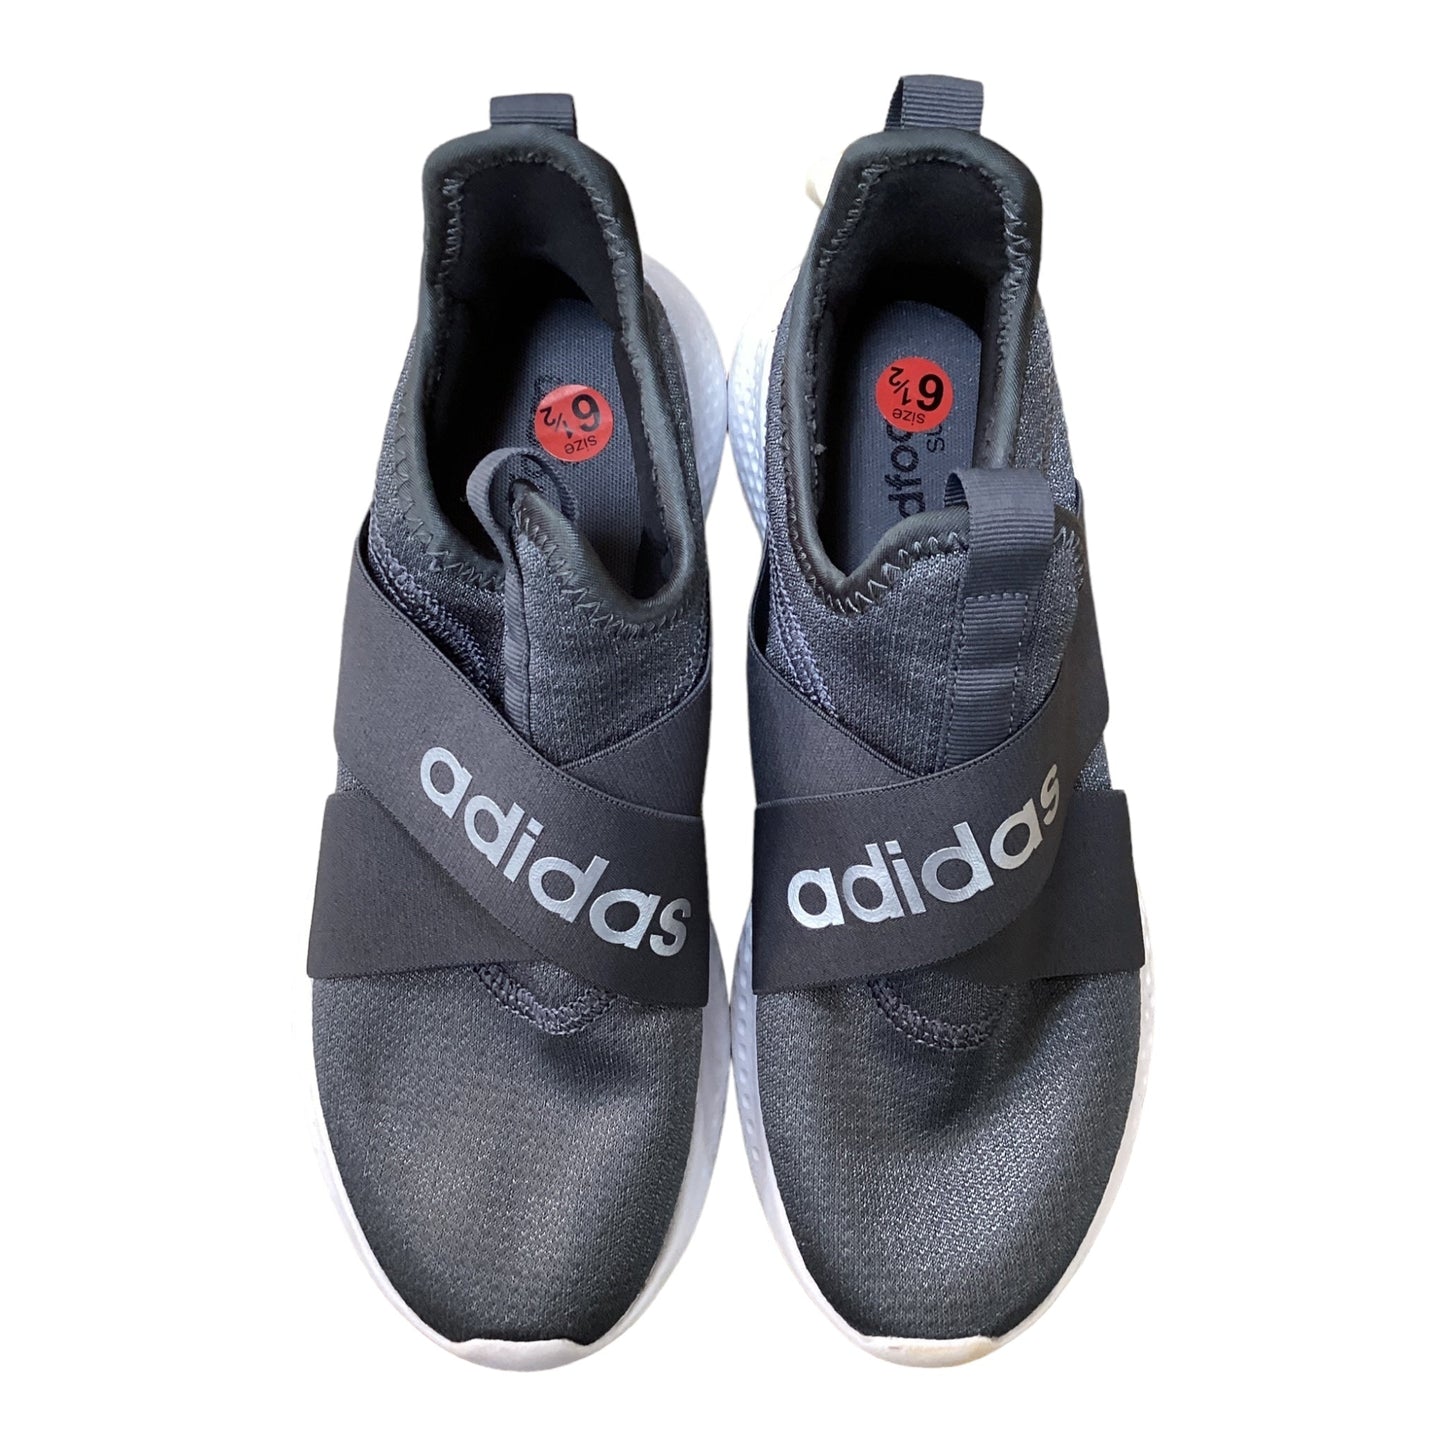 Grey Shoes Athletic Adidas, Size 6.5